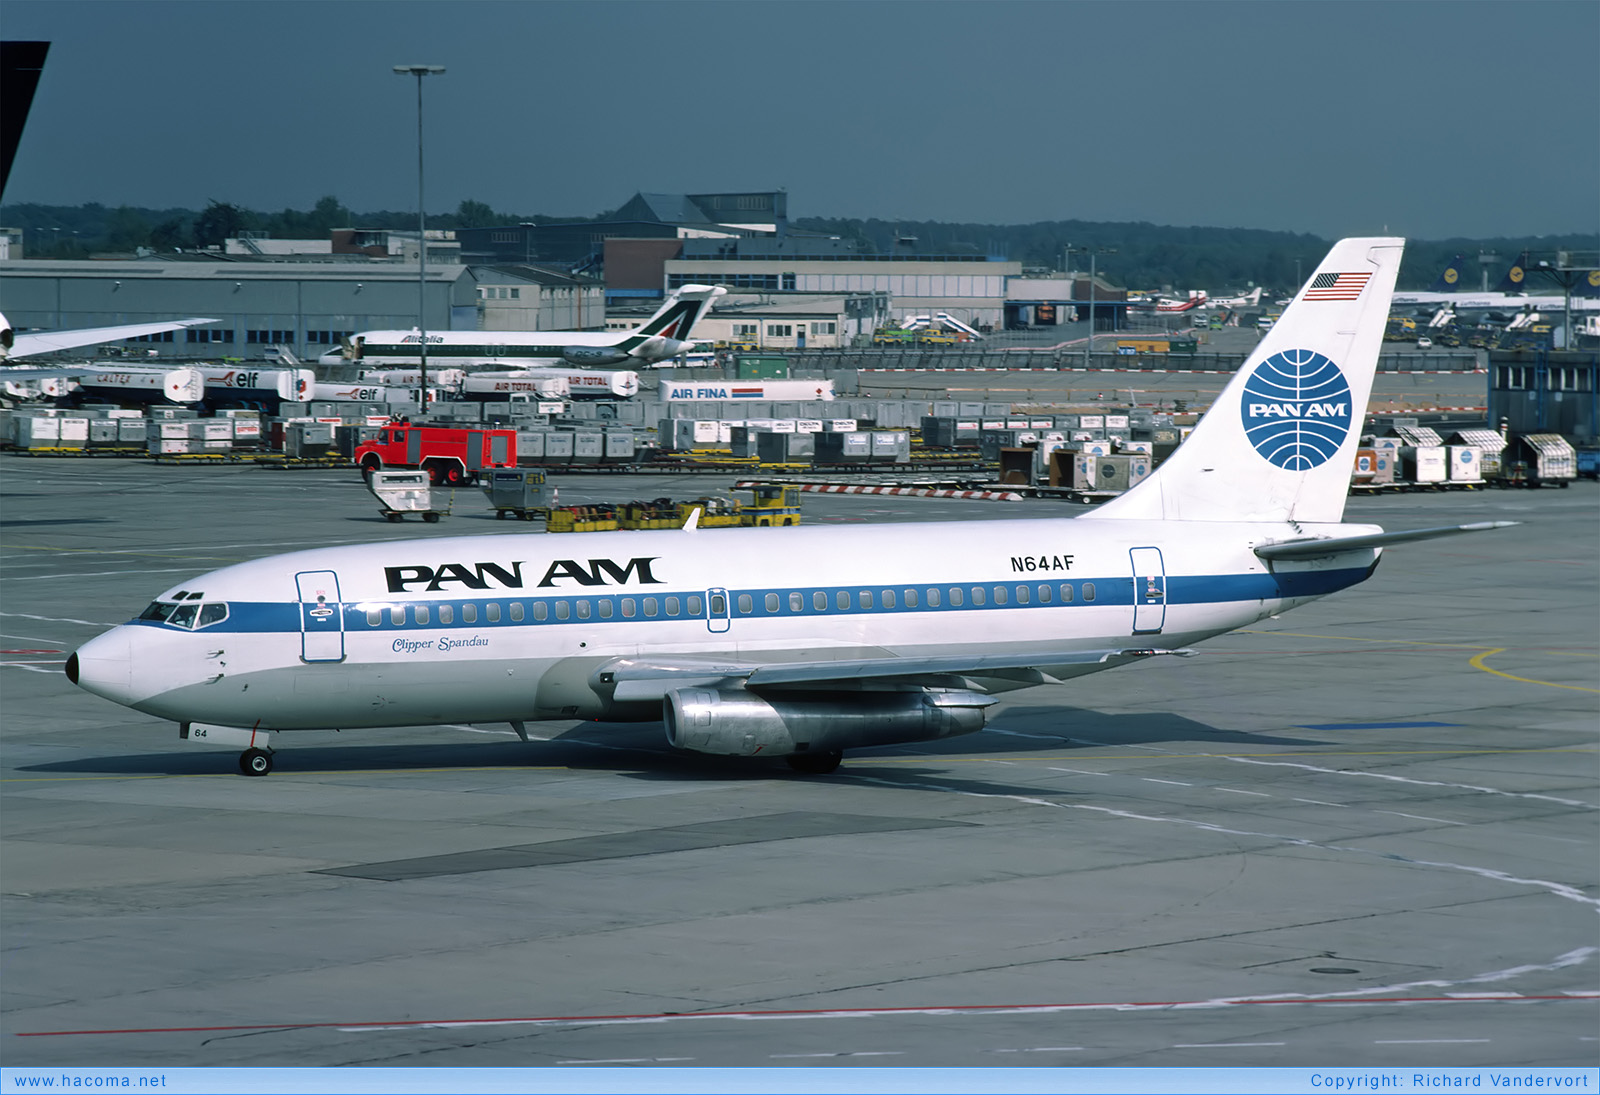 Photo of N64AF - Pan Am Clipper Spandau / San Diego / Morning Glory - Frankfurt International Airport - Sep 1982